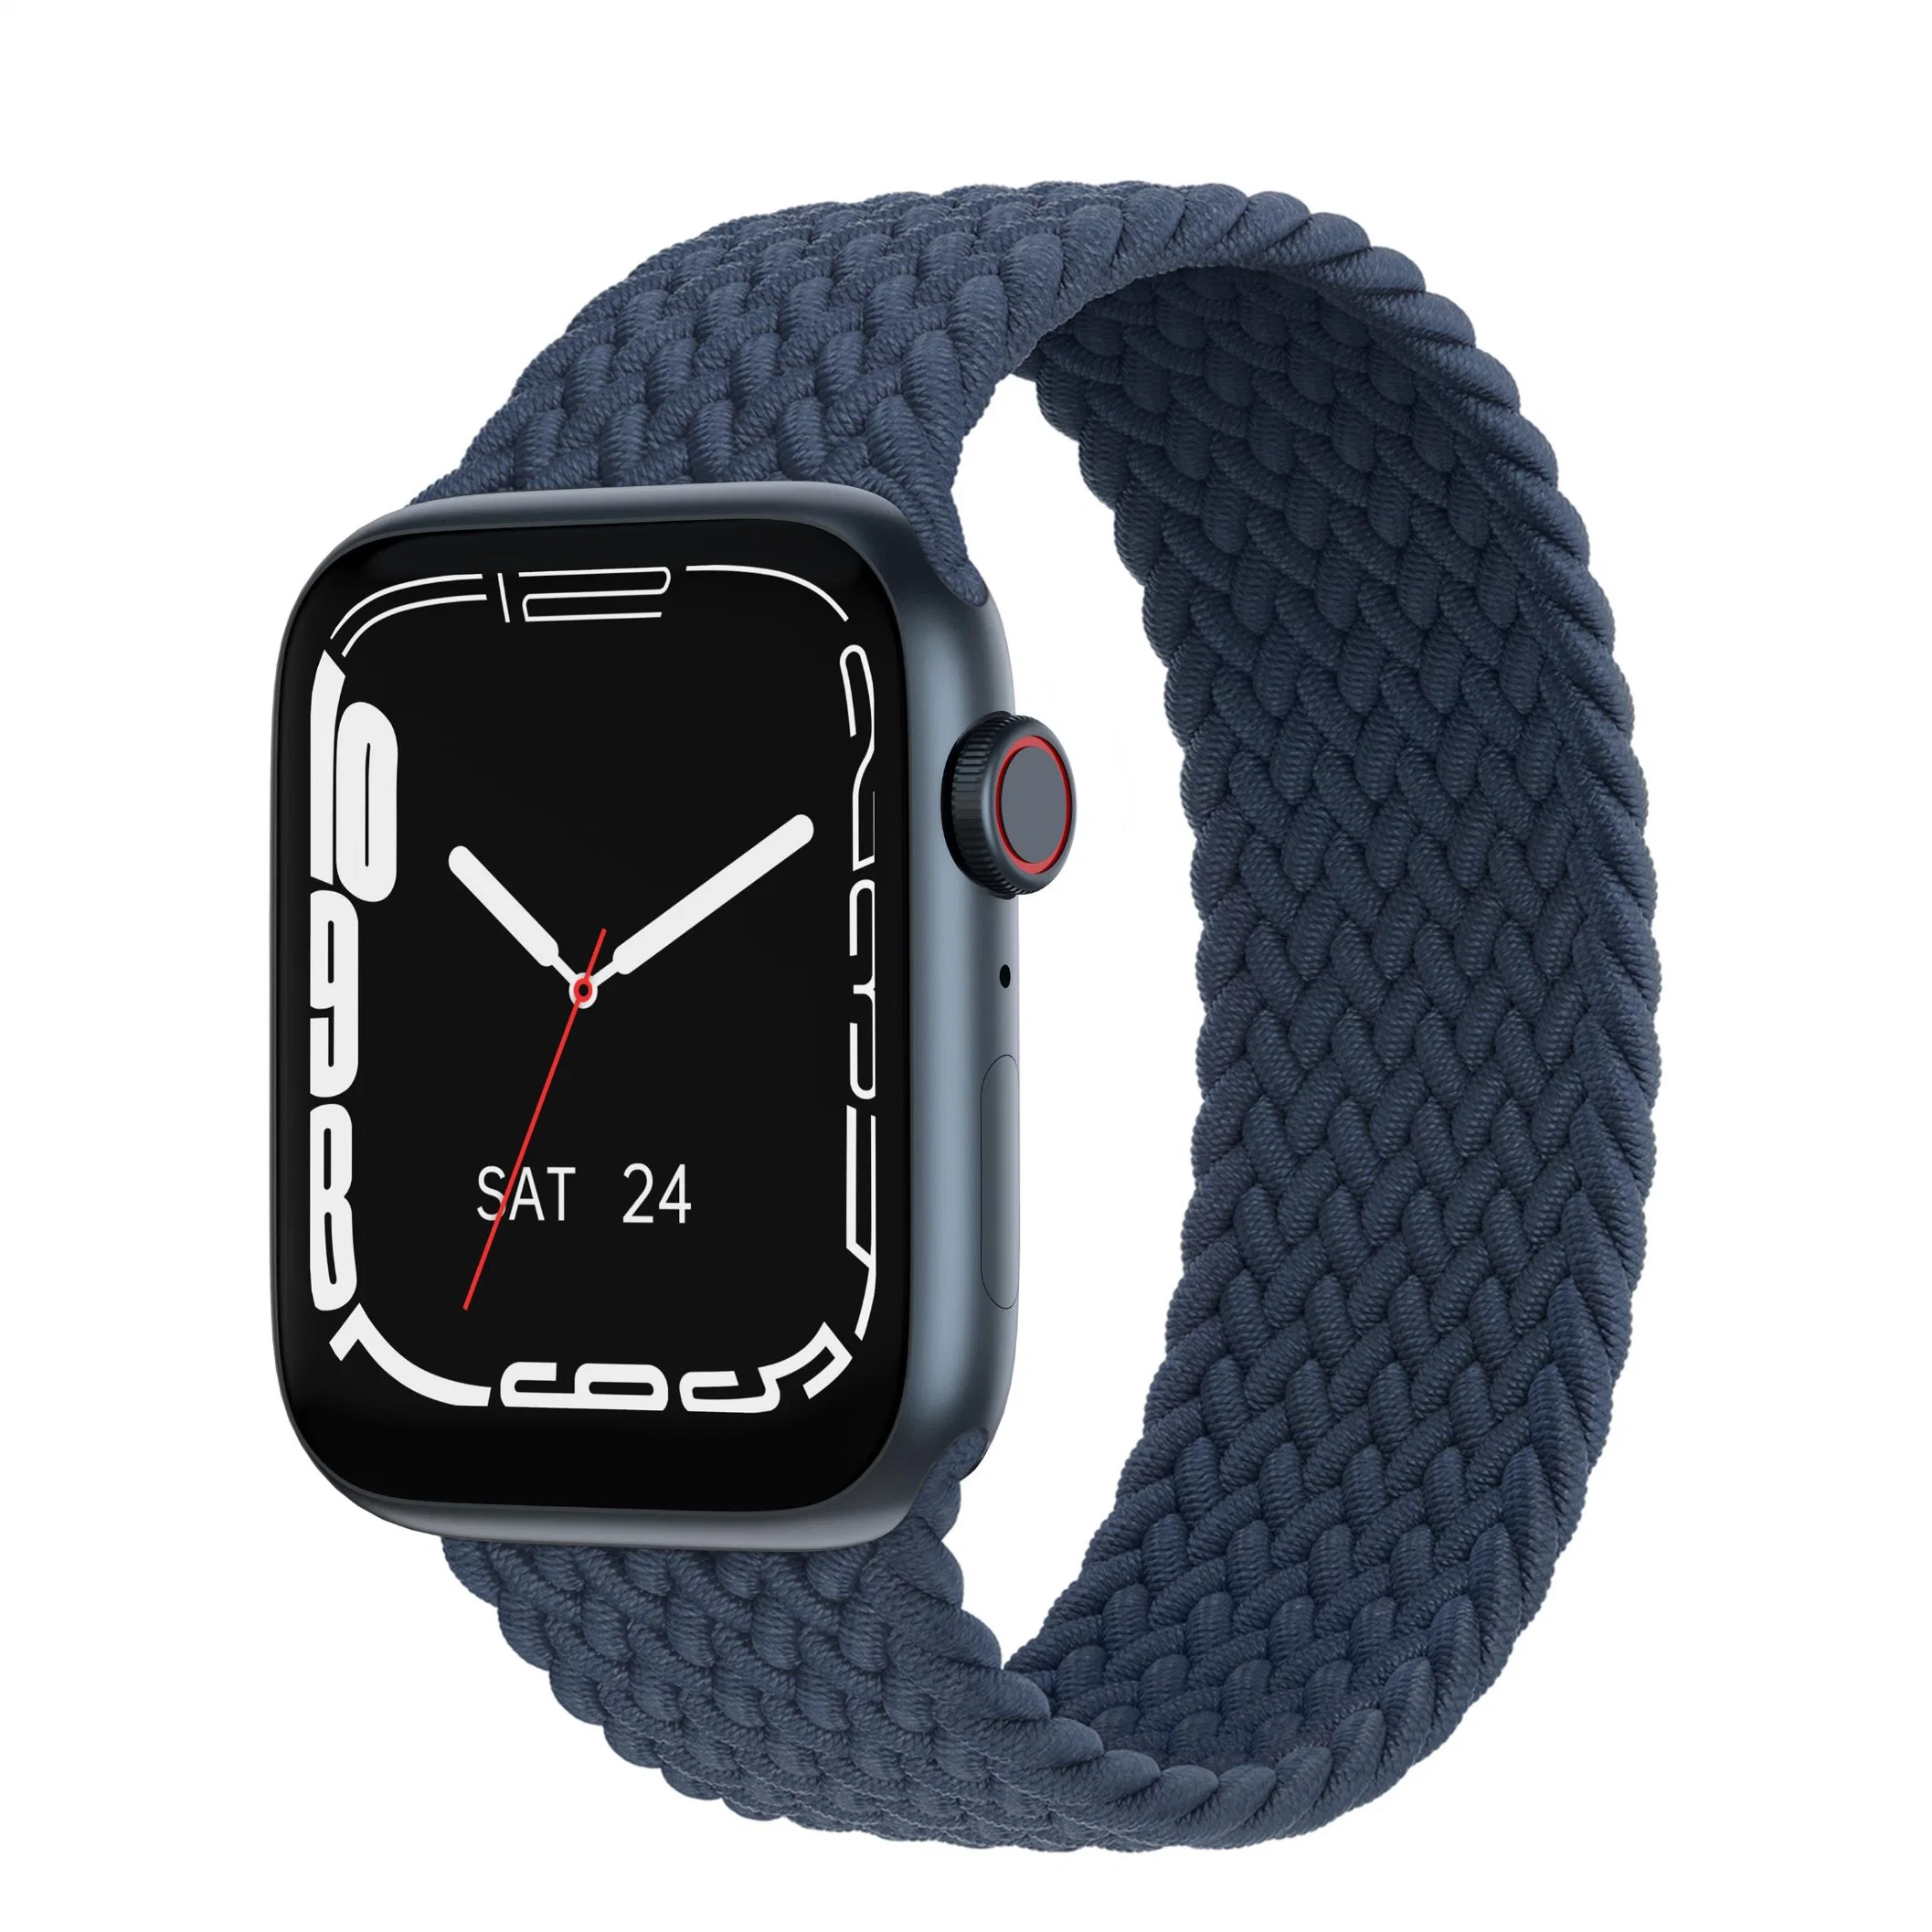 Portátil Gifting Reloj cómodo pulsera reloj Smart Tracker Bluetooth Aptitud Smartwatch